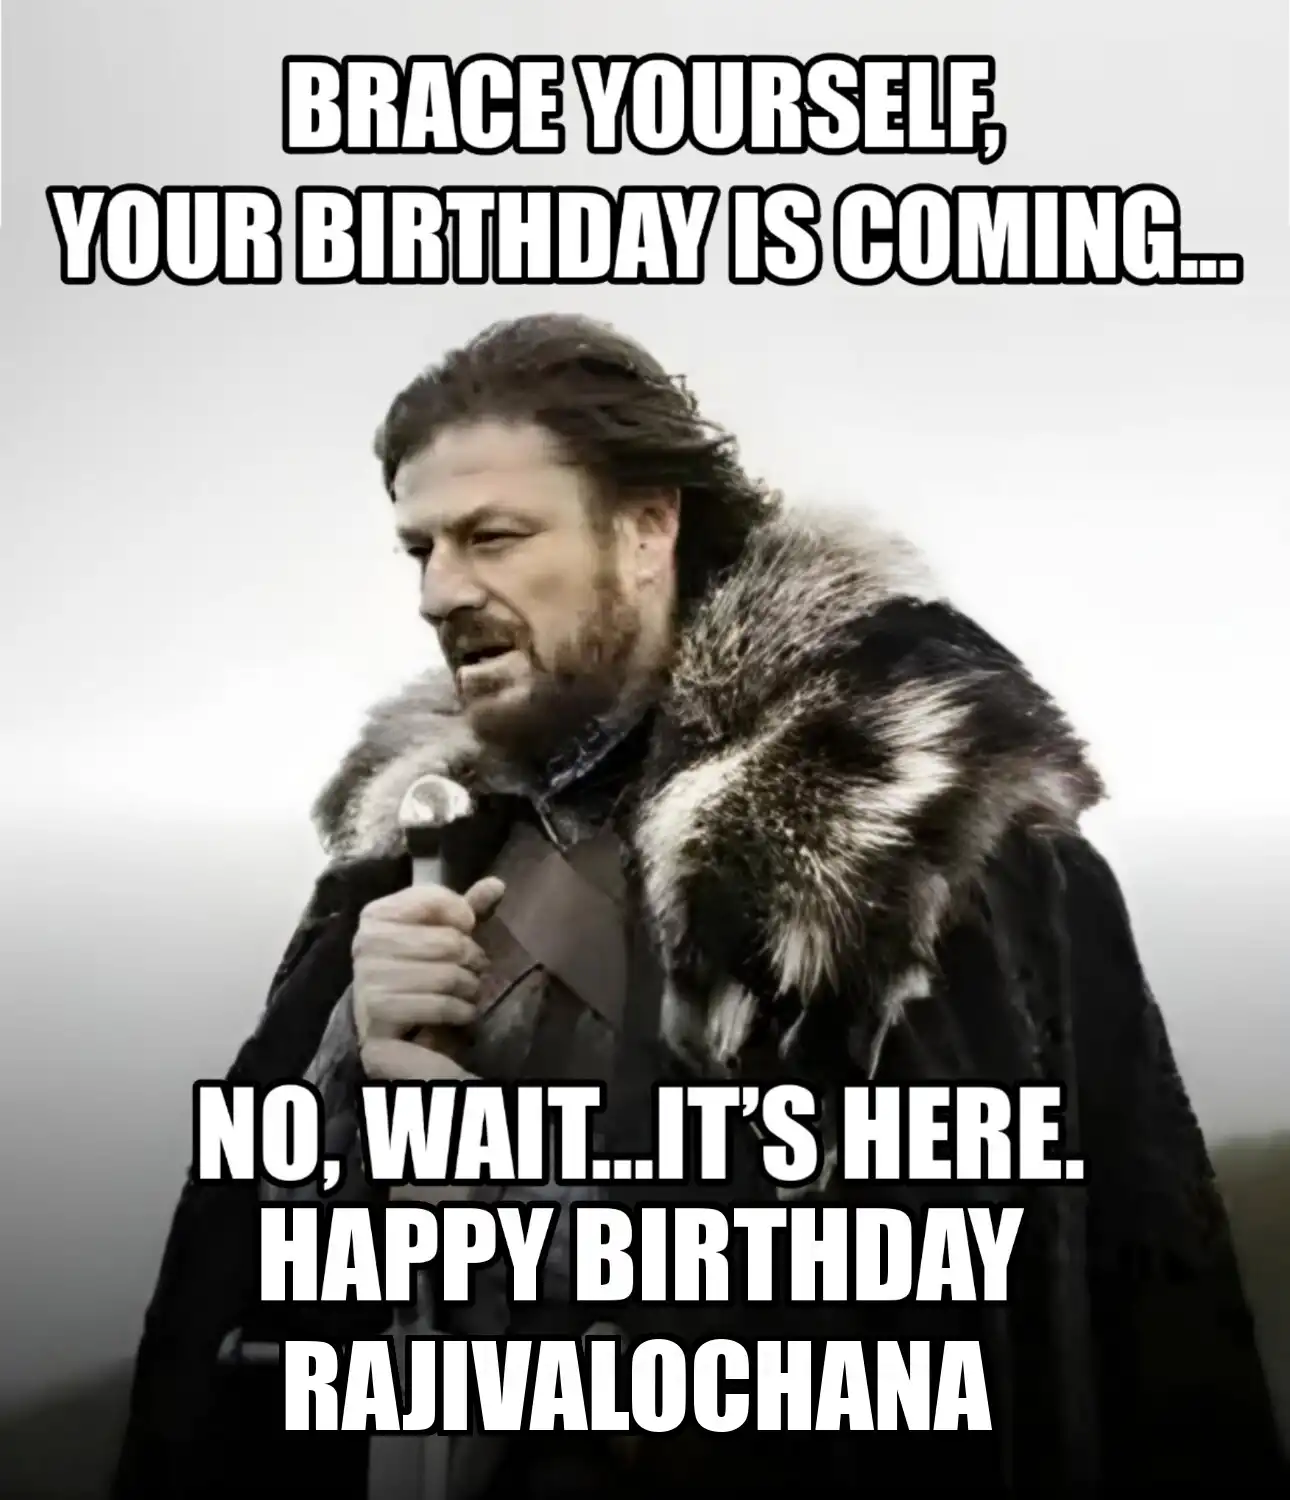 Happy Birthday Rajivalochana Brace Yourself Your Birthday Is Coming Meme